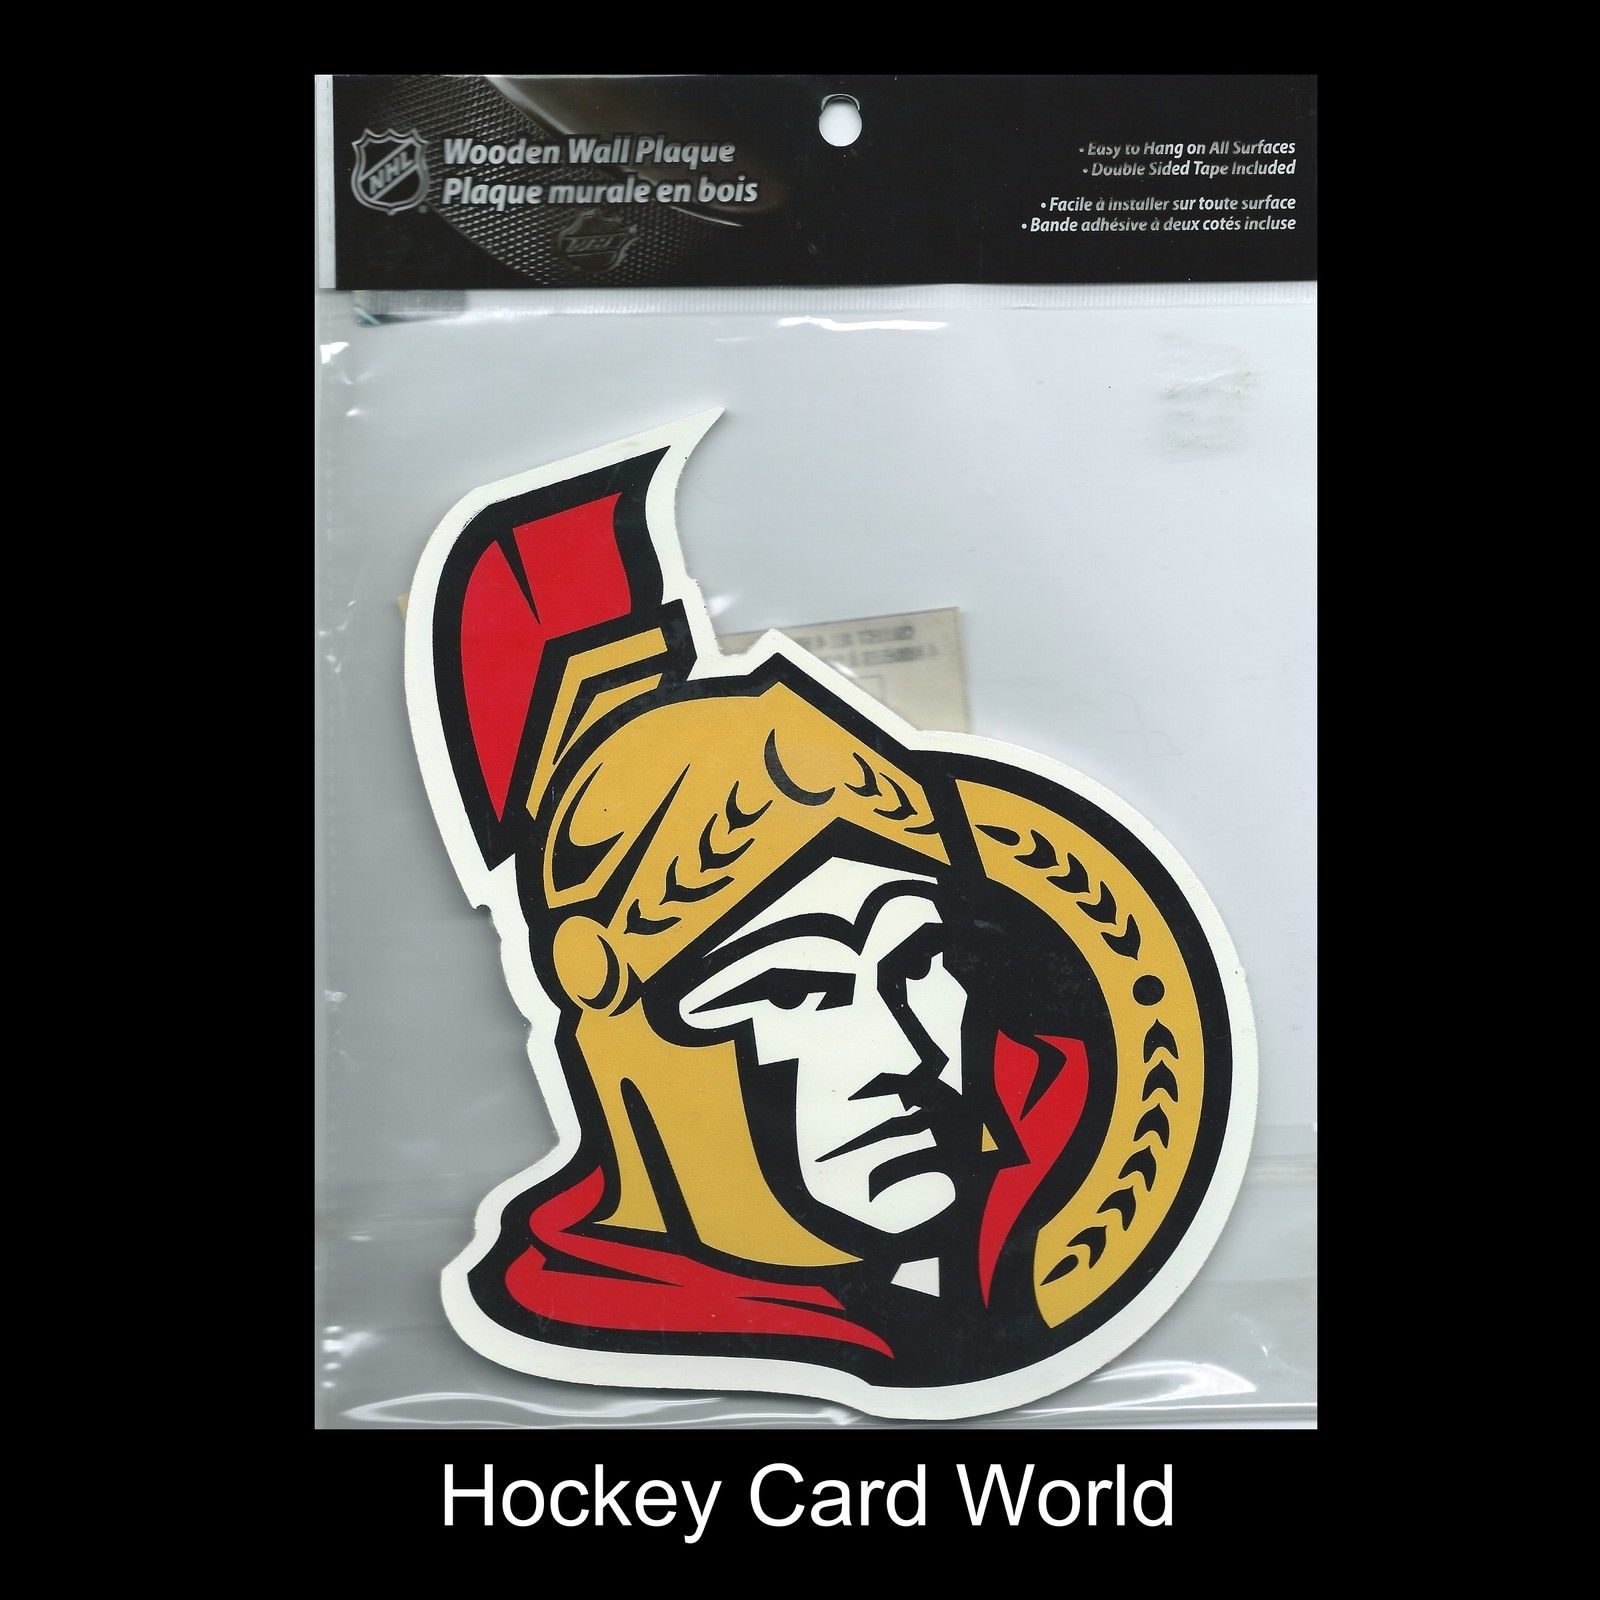  Ottawa Senators Wooden Wall Plaque 7.5"x6.5" NHL Licensed - Hang Anywhere Image 1